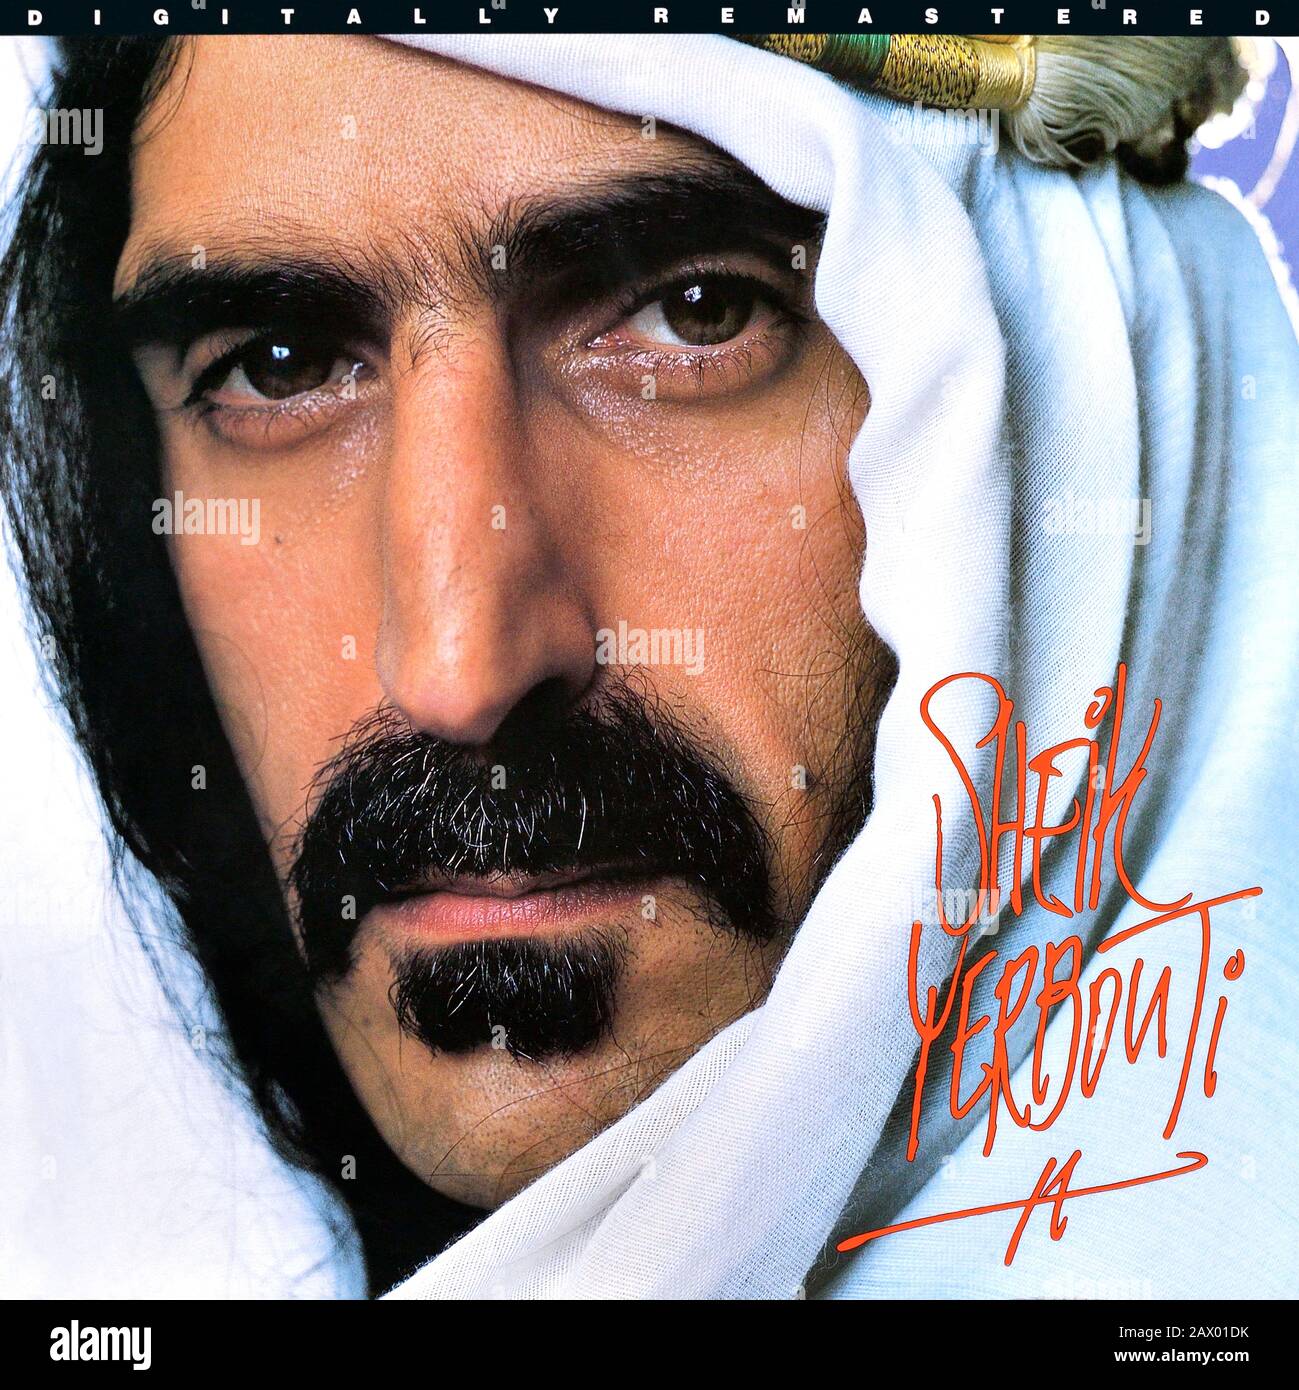 Frank Zappa - original vinyl album cover - Sheik Yerbouti - 1979 Stock Photo